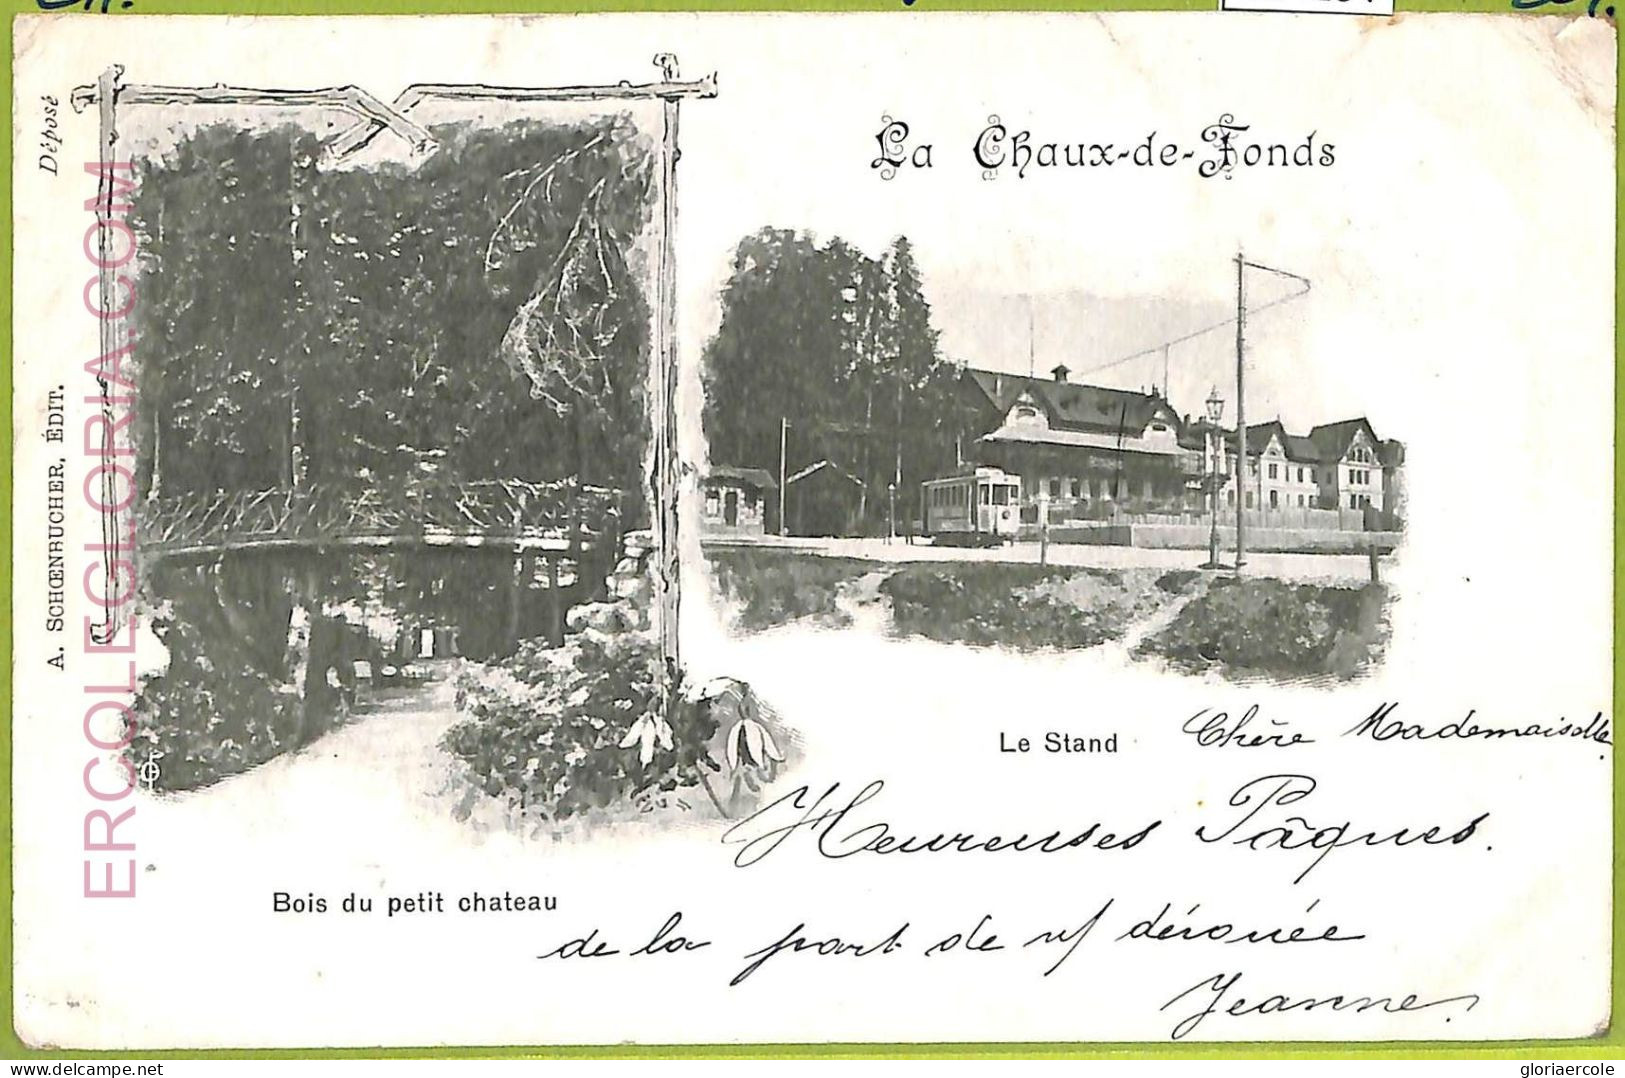 Ad4134 - SWITZERLAND Schweitz-Ansichtskarten VINTAGE POSTCARD0-Le Chaux-de-Fonds - La Chaux